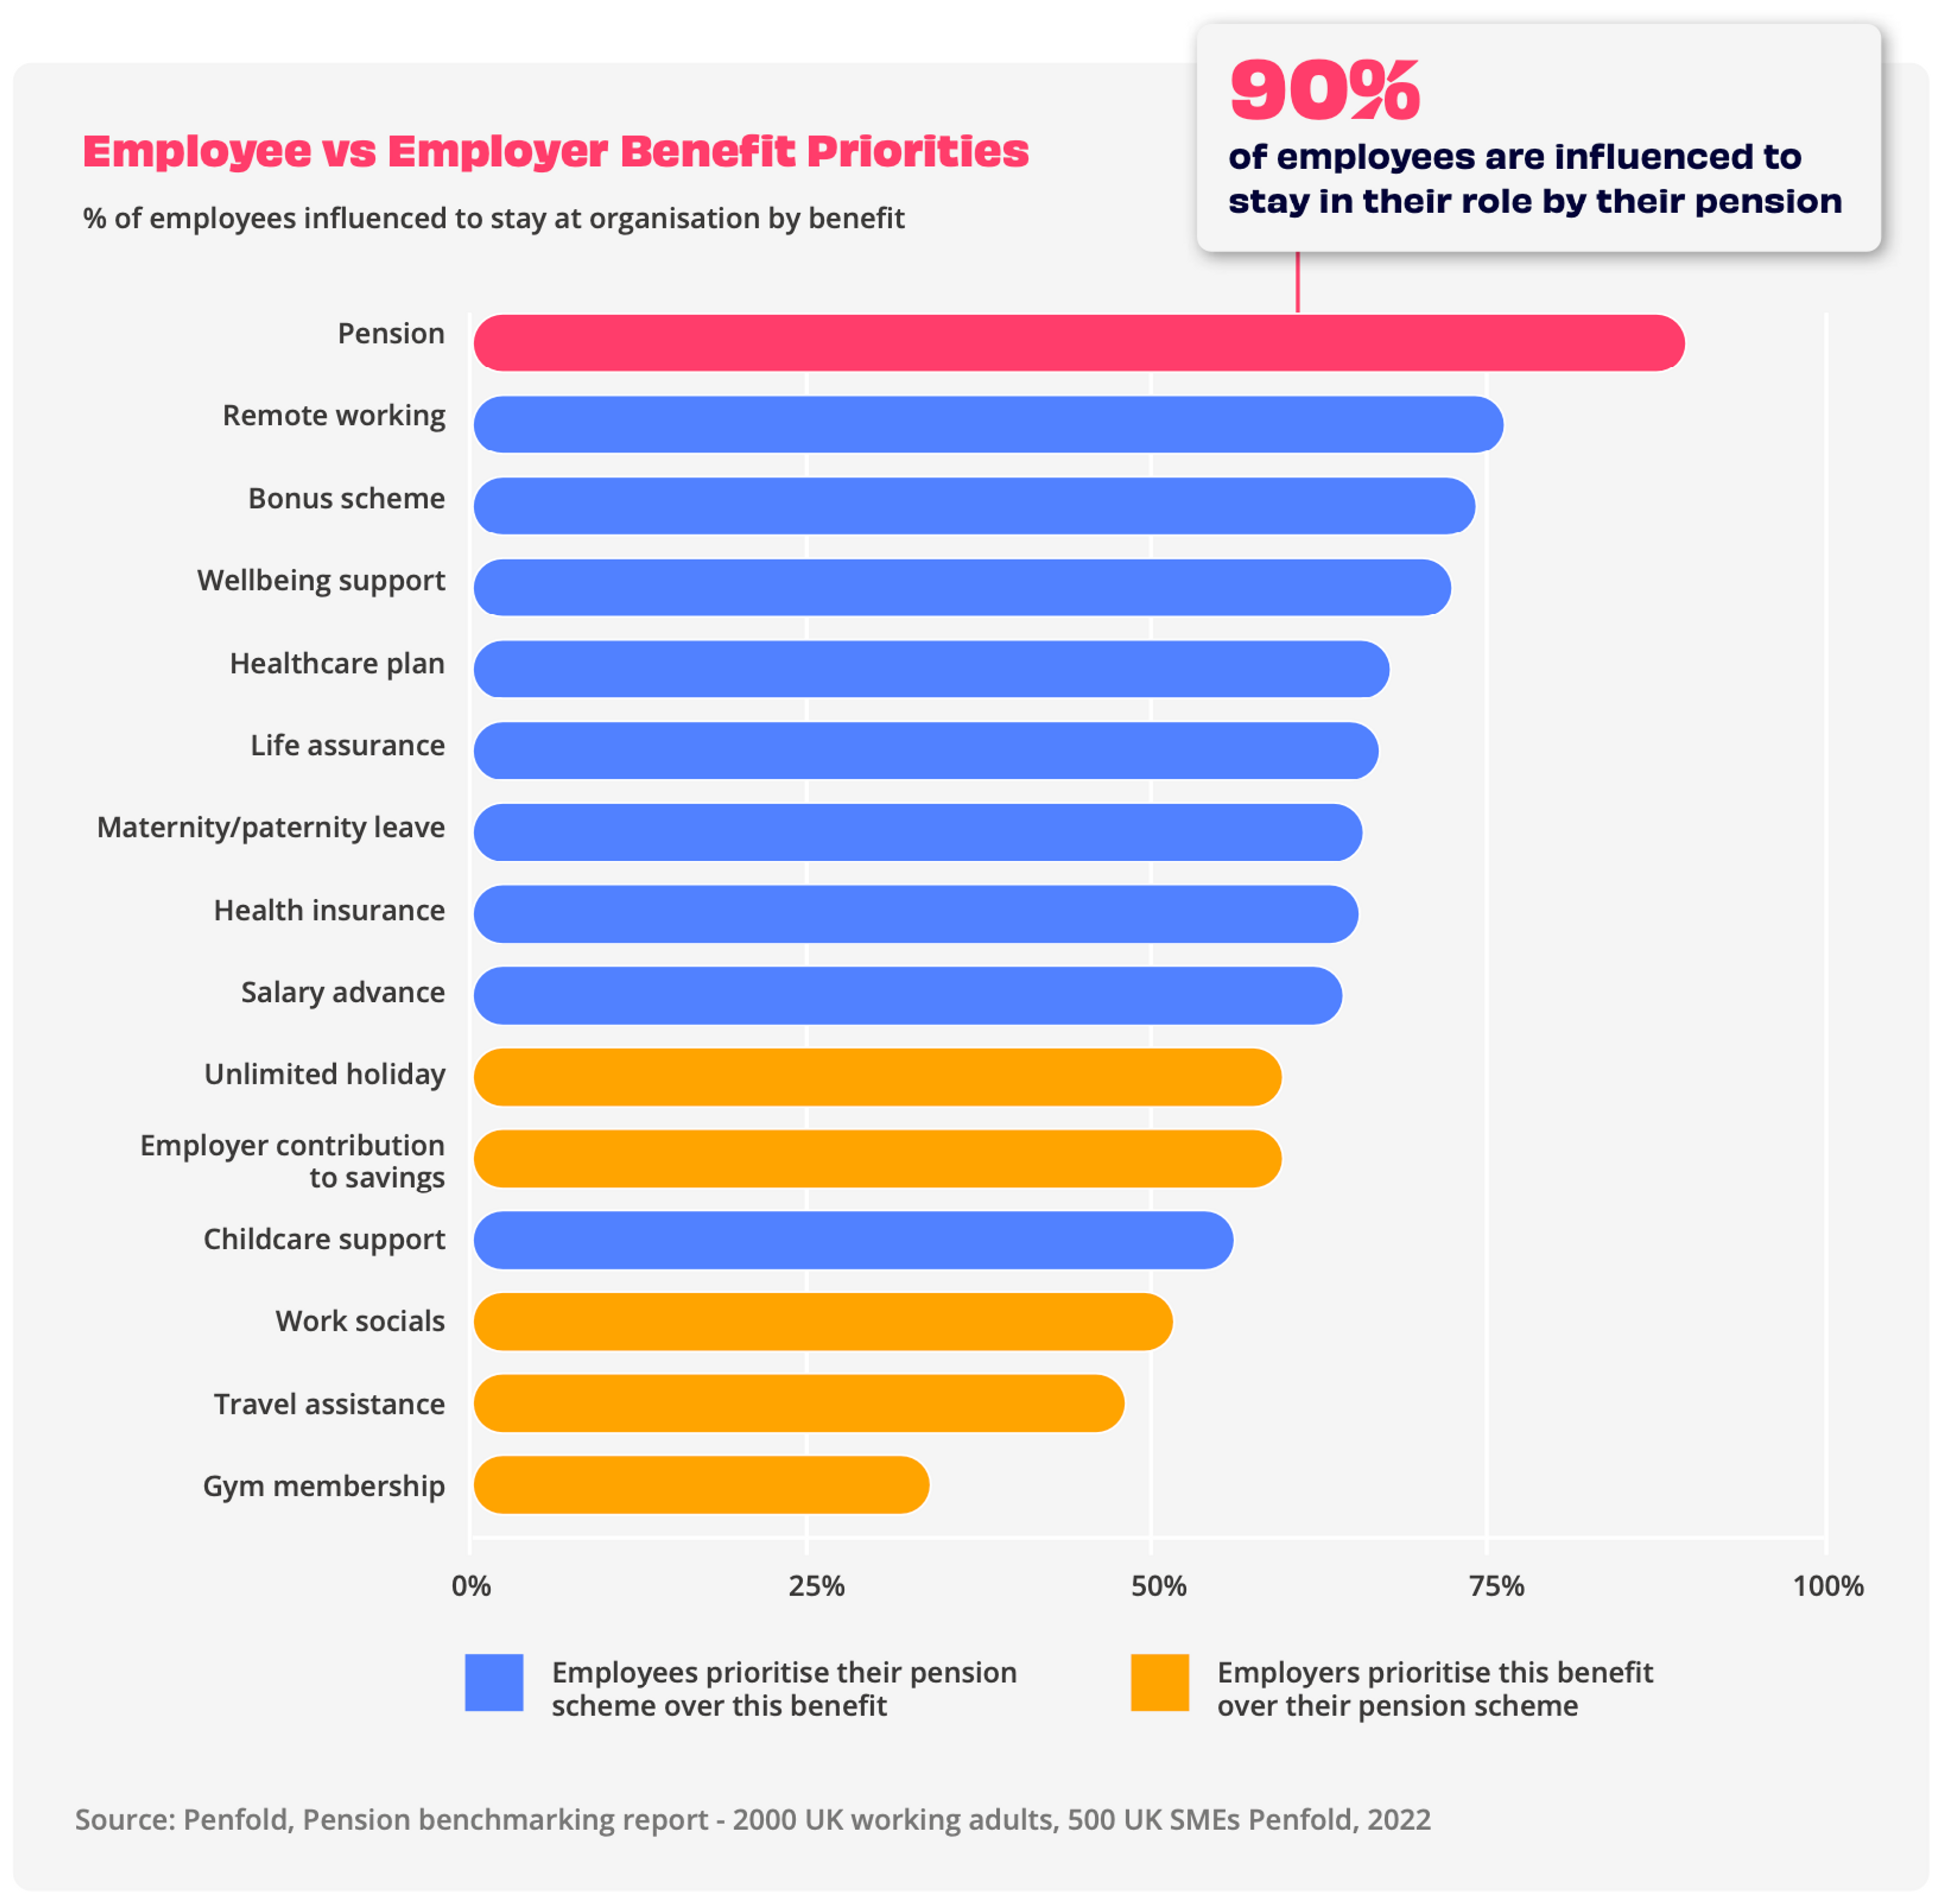 Bar chart showing employee vs employer benefit priorities